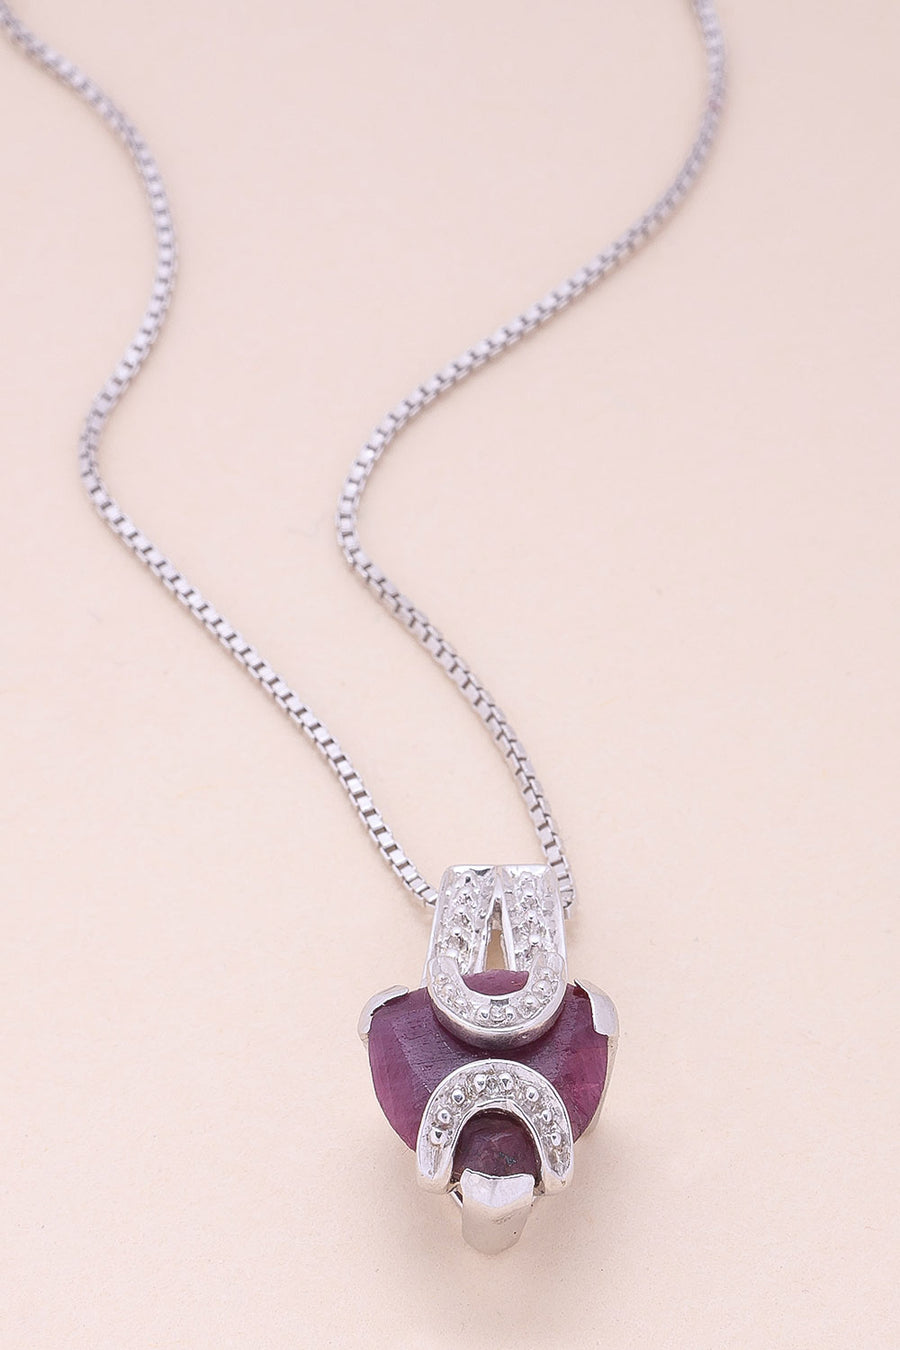 Silver Necklace Pendant Ruby Chain 10067183 - Avishya